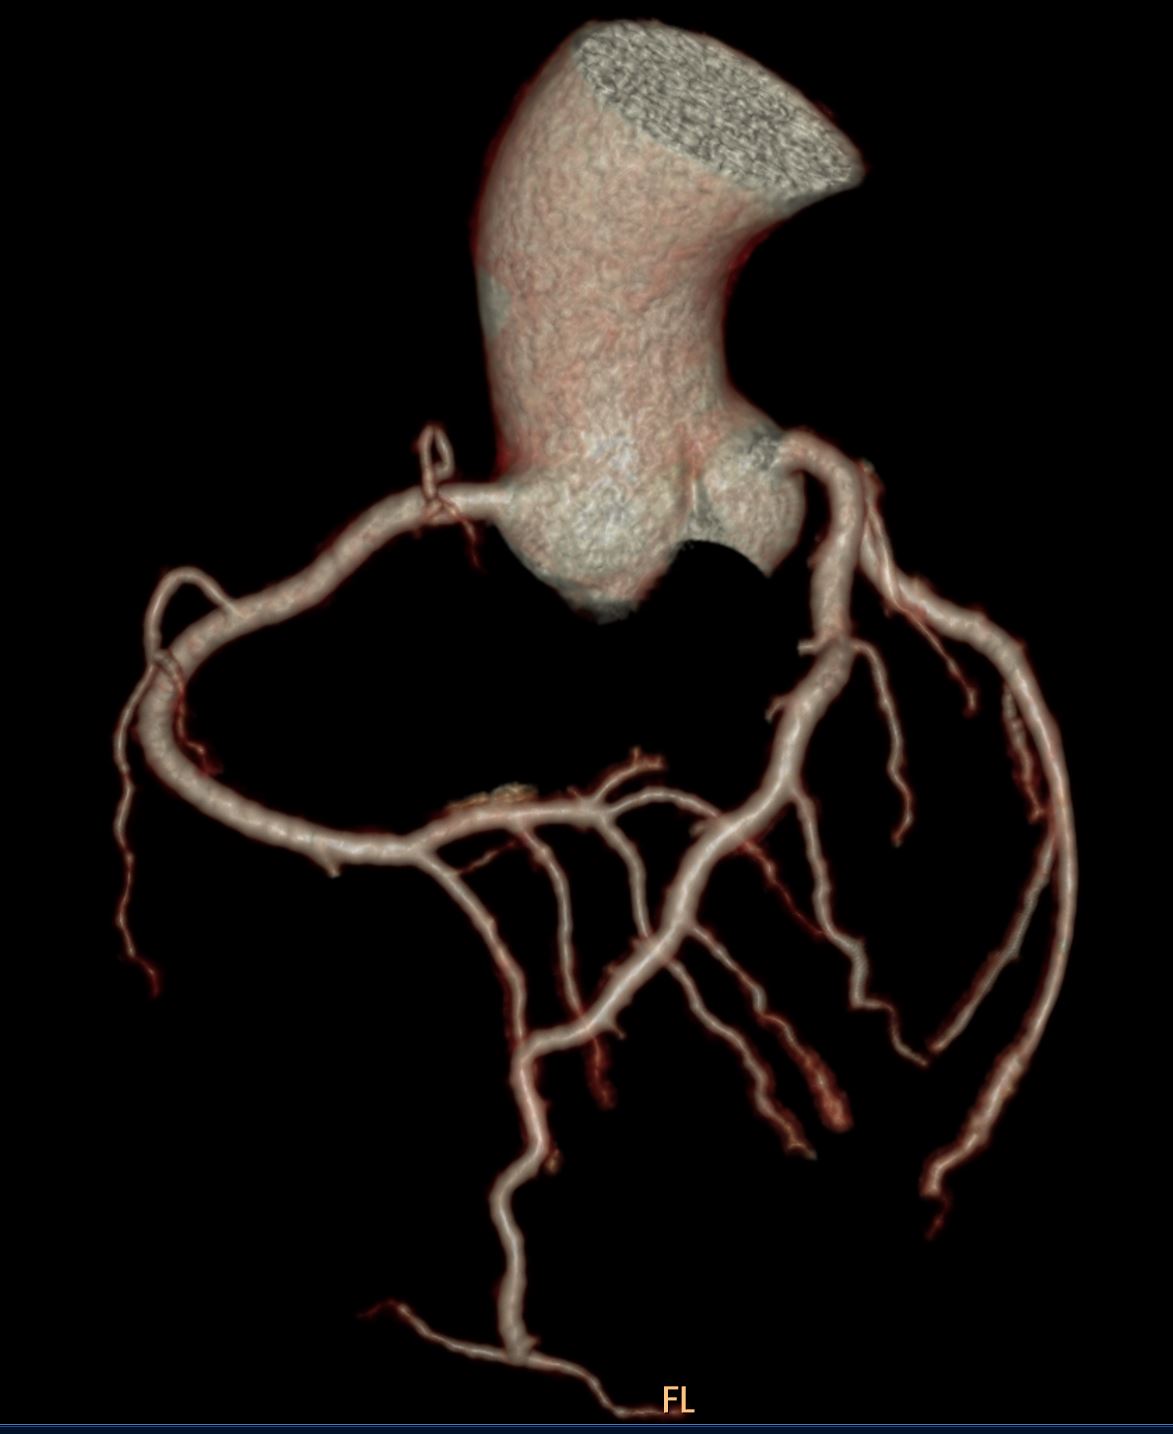 Herz-CT